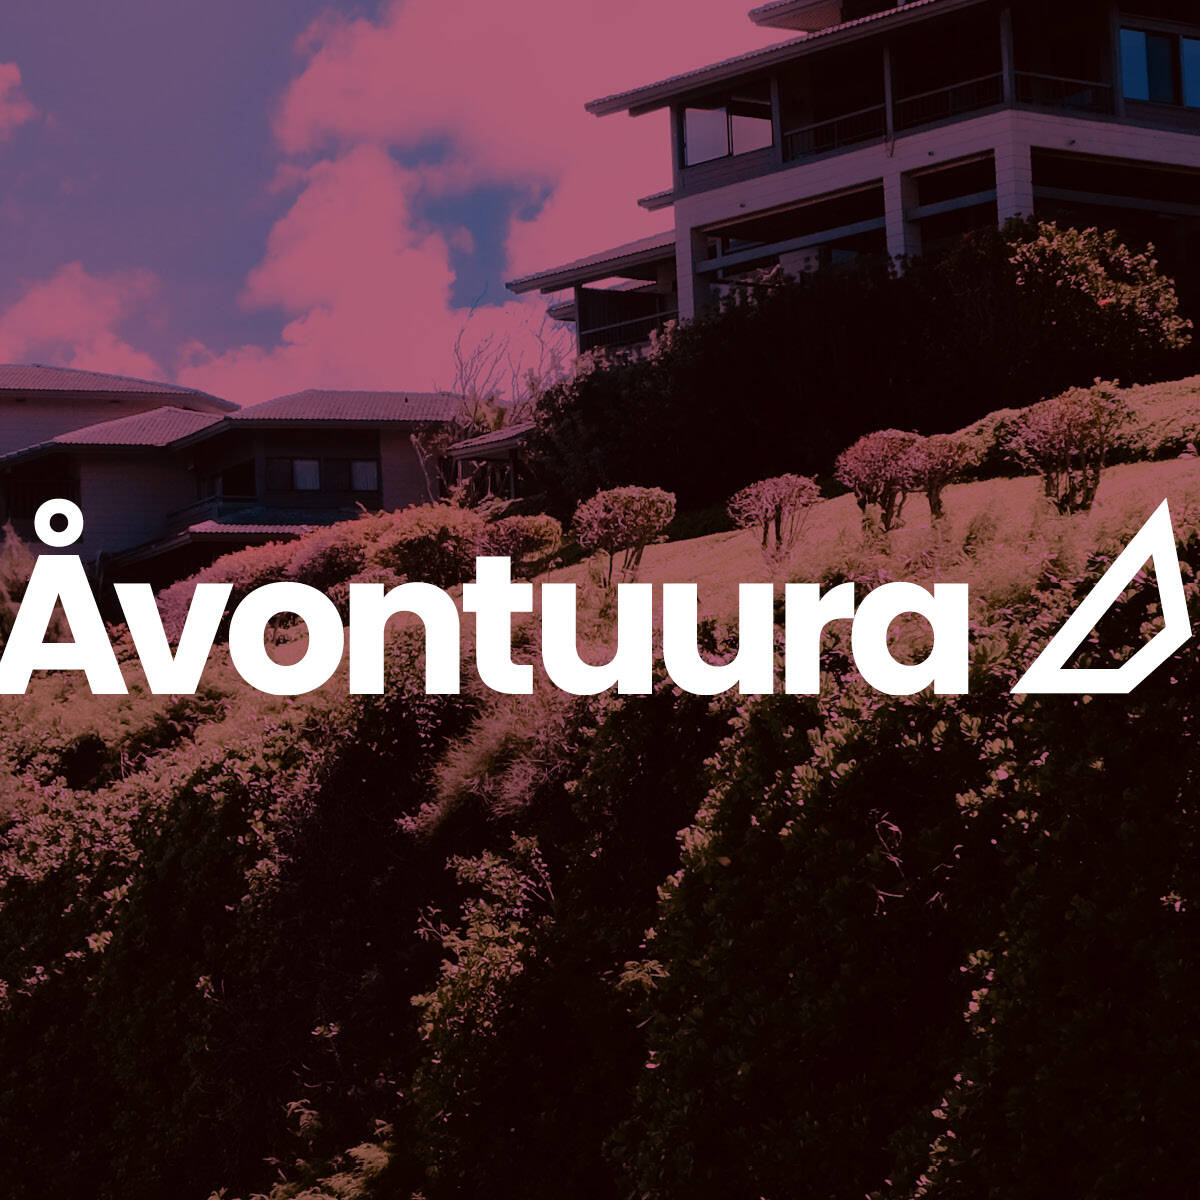 Avonturra-canadian-travel-blog-brand-design-universe-ft